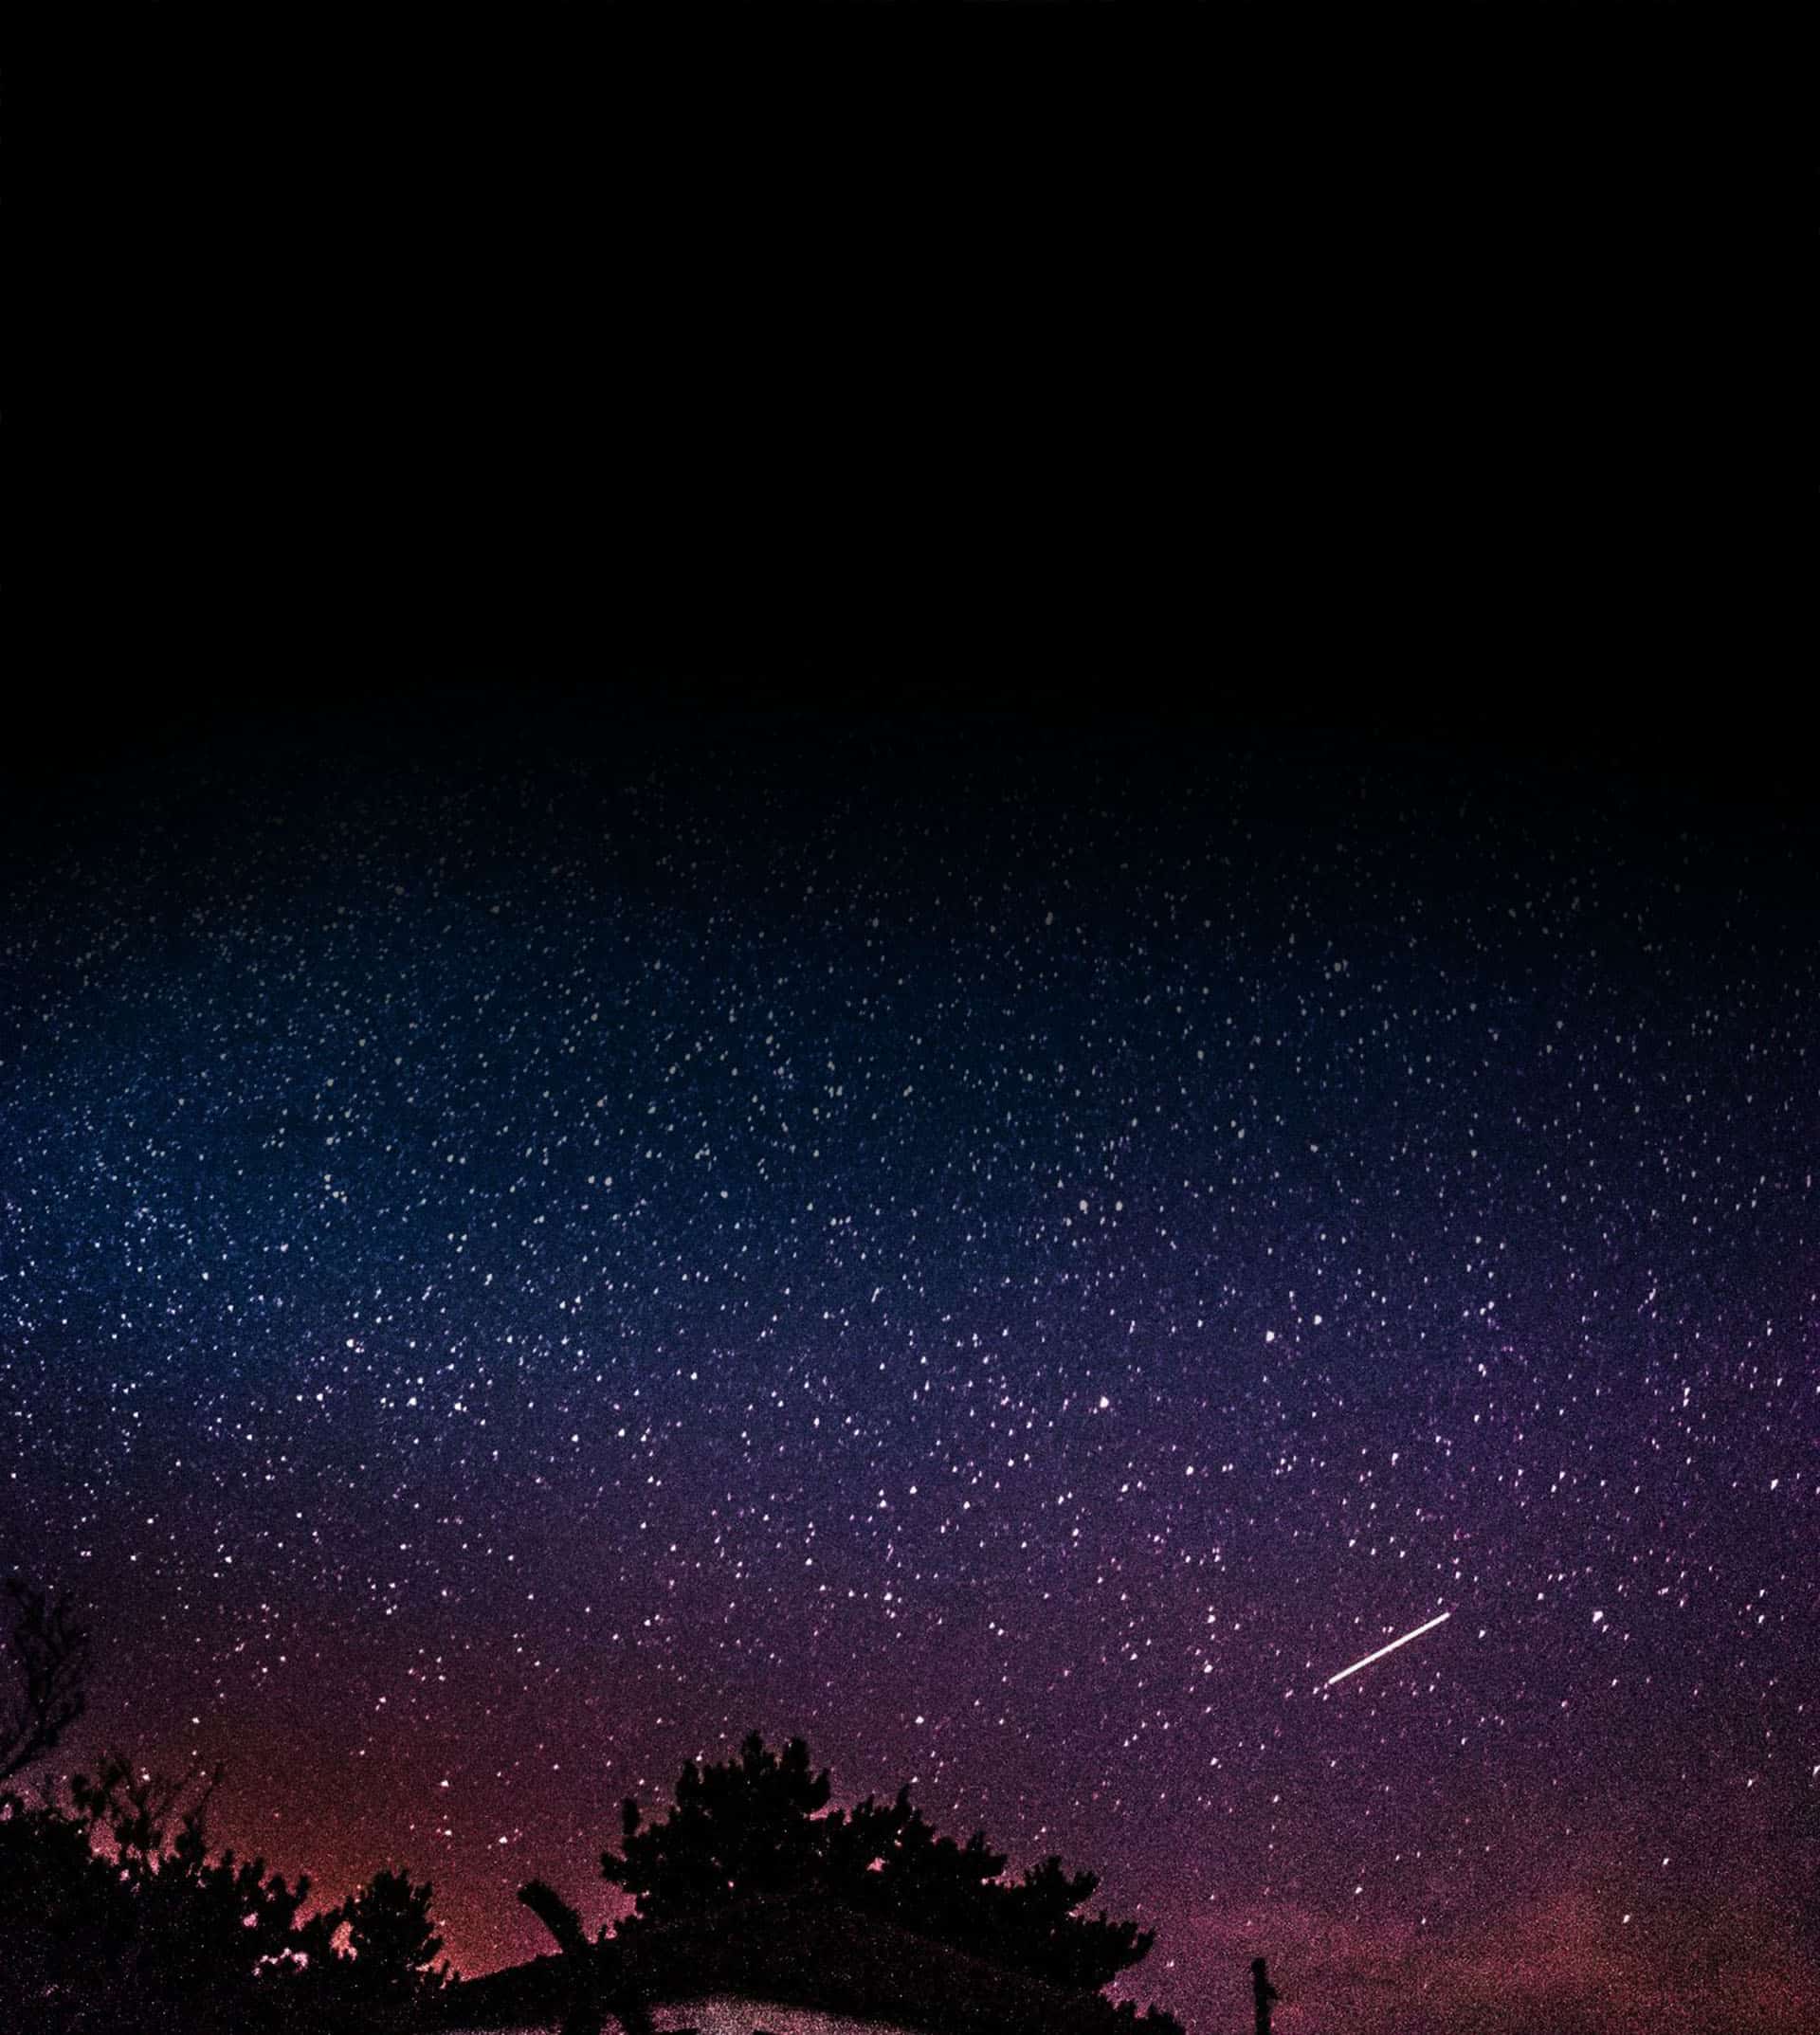 shooting star in night sky - Galaxy IT